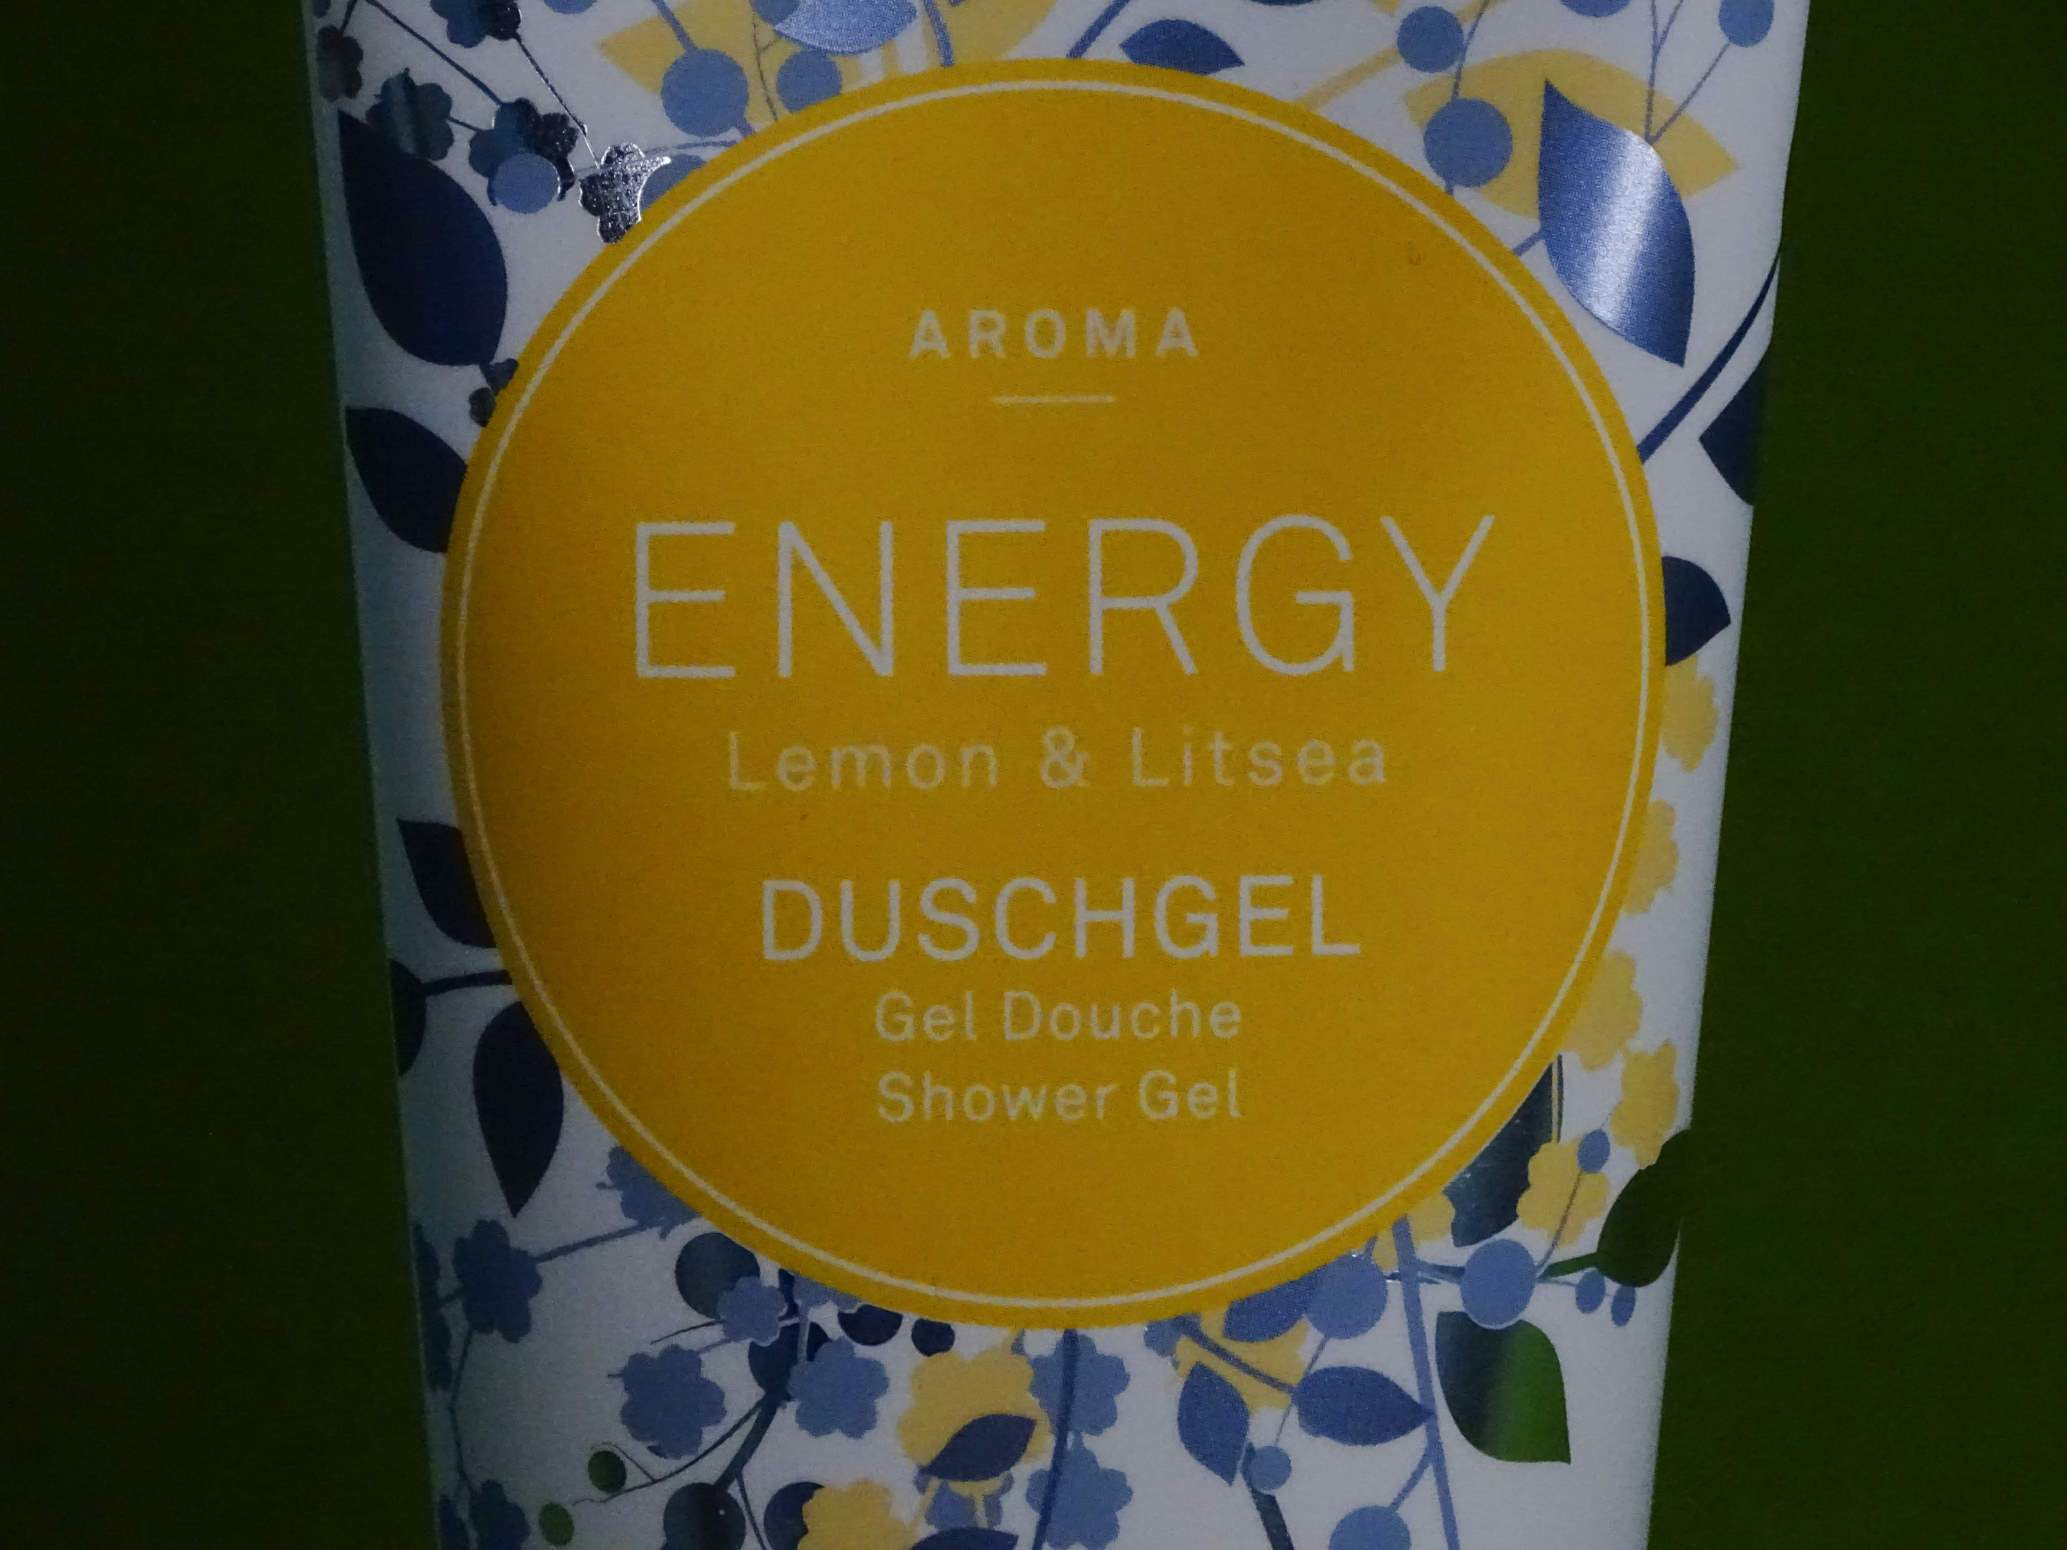 Duschgel Energy 200 ml